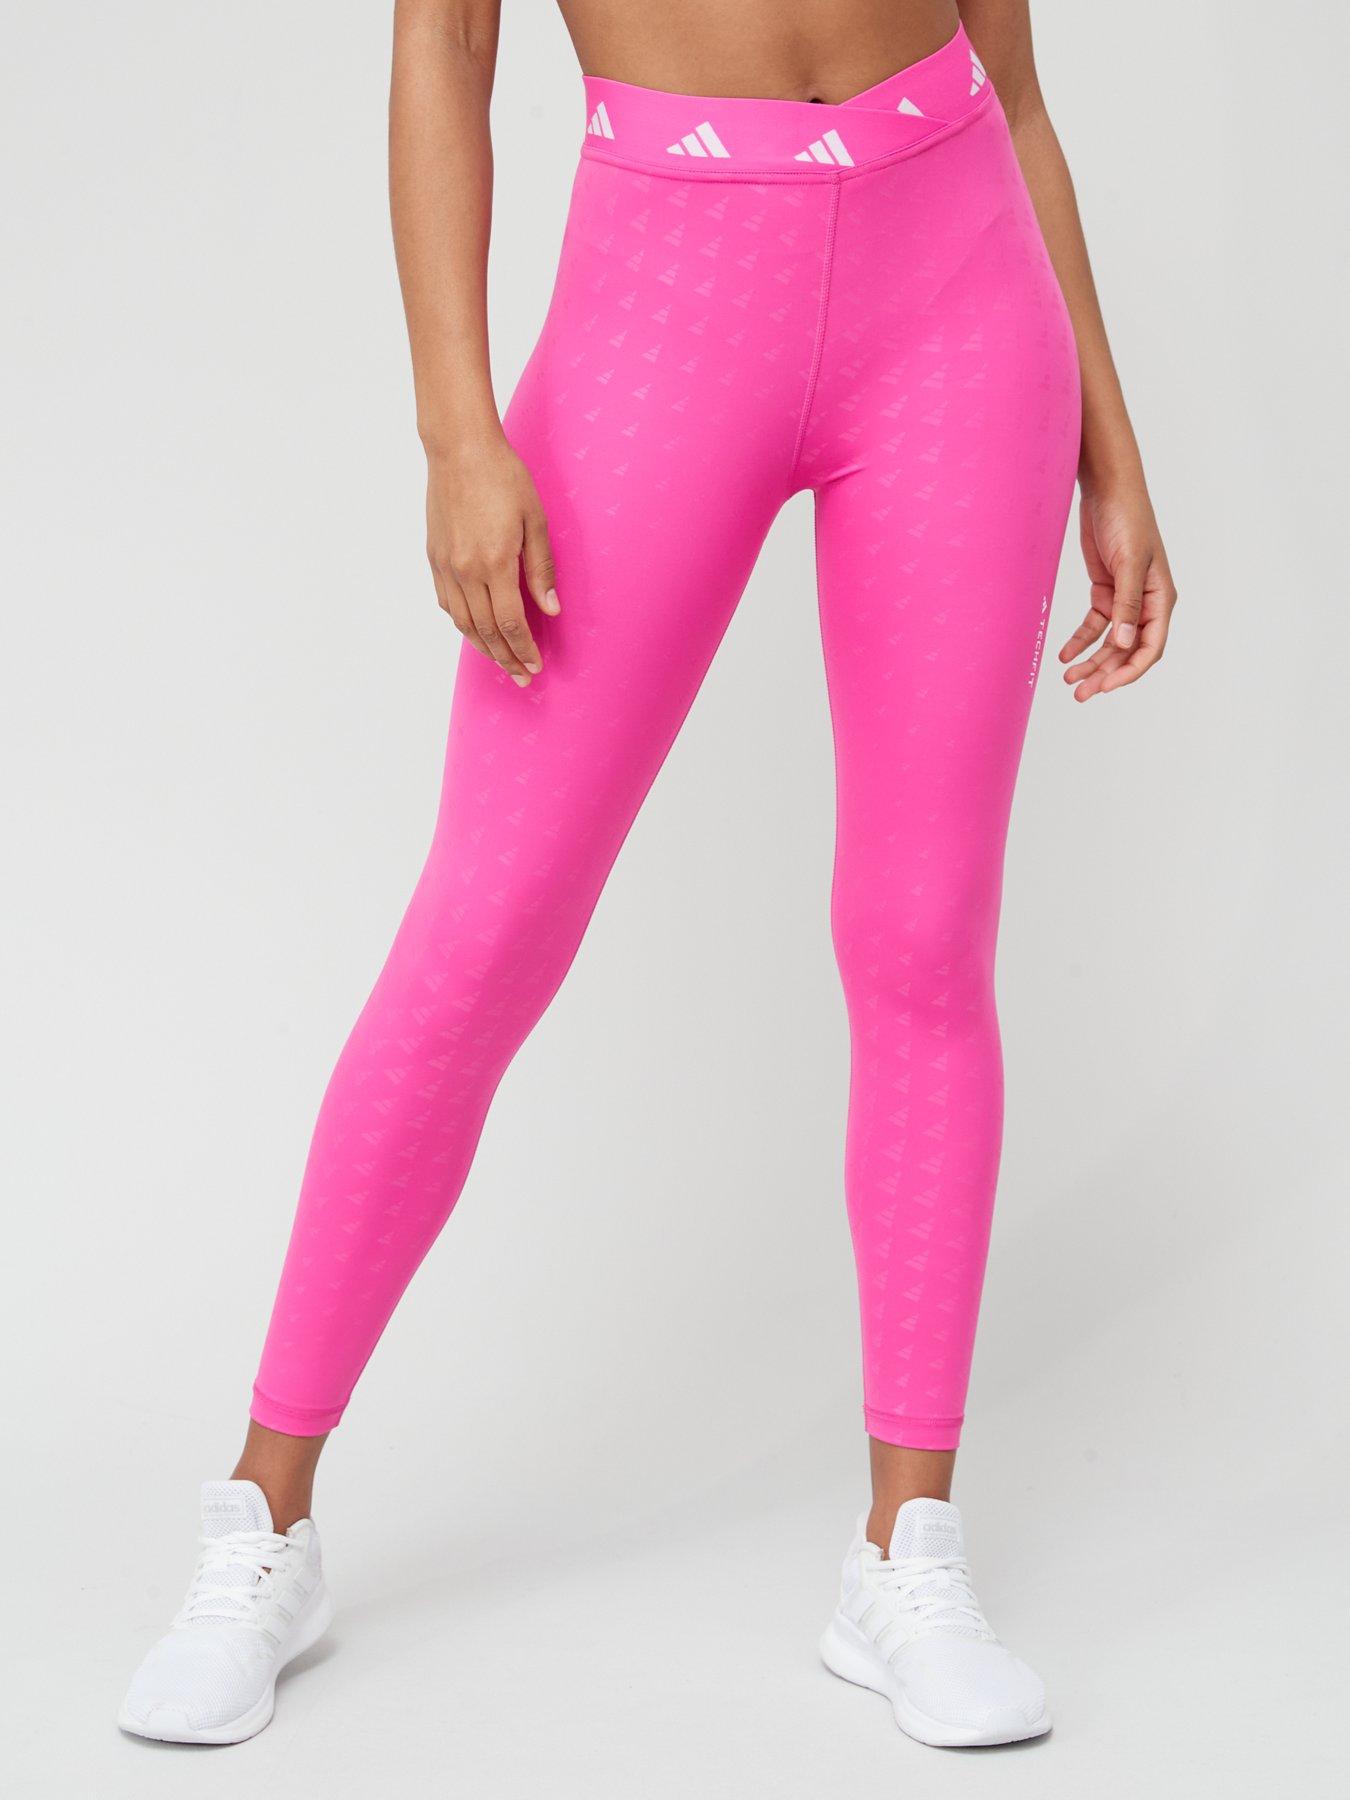 https://media.very.co.uk/i/very/V8XHP_SQ1_0000000063_PINK_MDf/adidas-training-brand-love-78-leggings-pink.jpg?$200x200_socialshare$